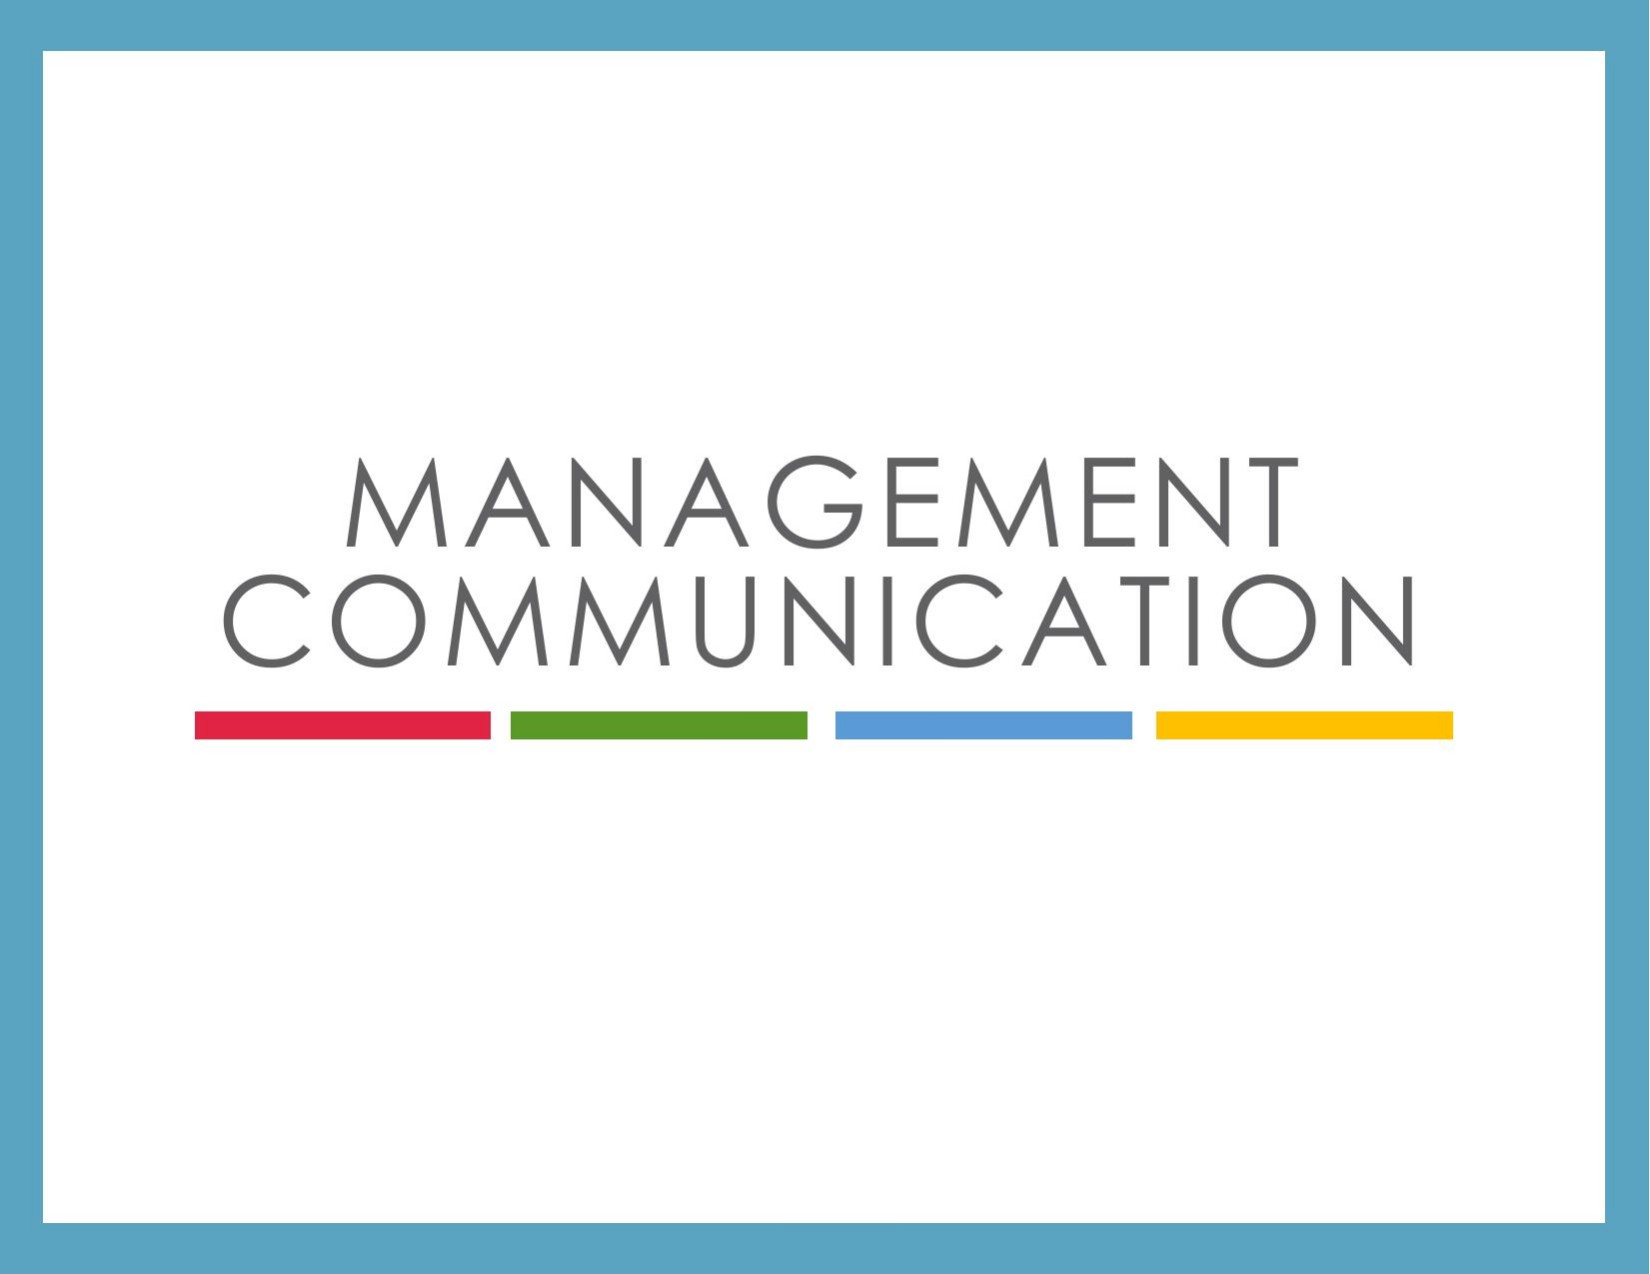 MANAGEMENT COMMUNICATION 2020